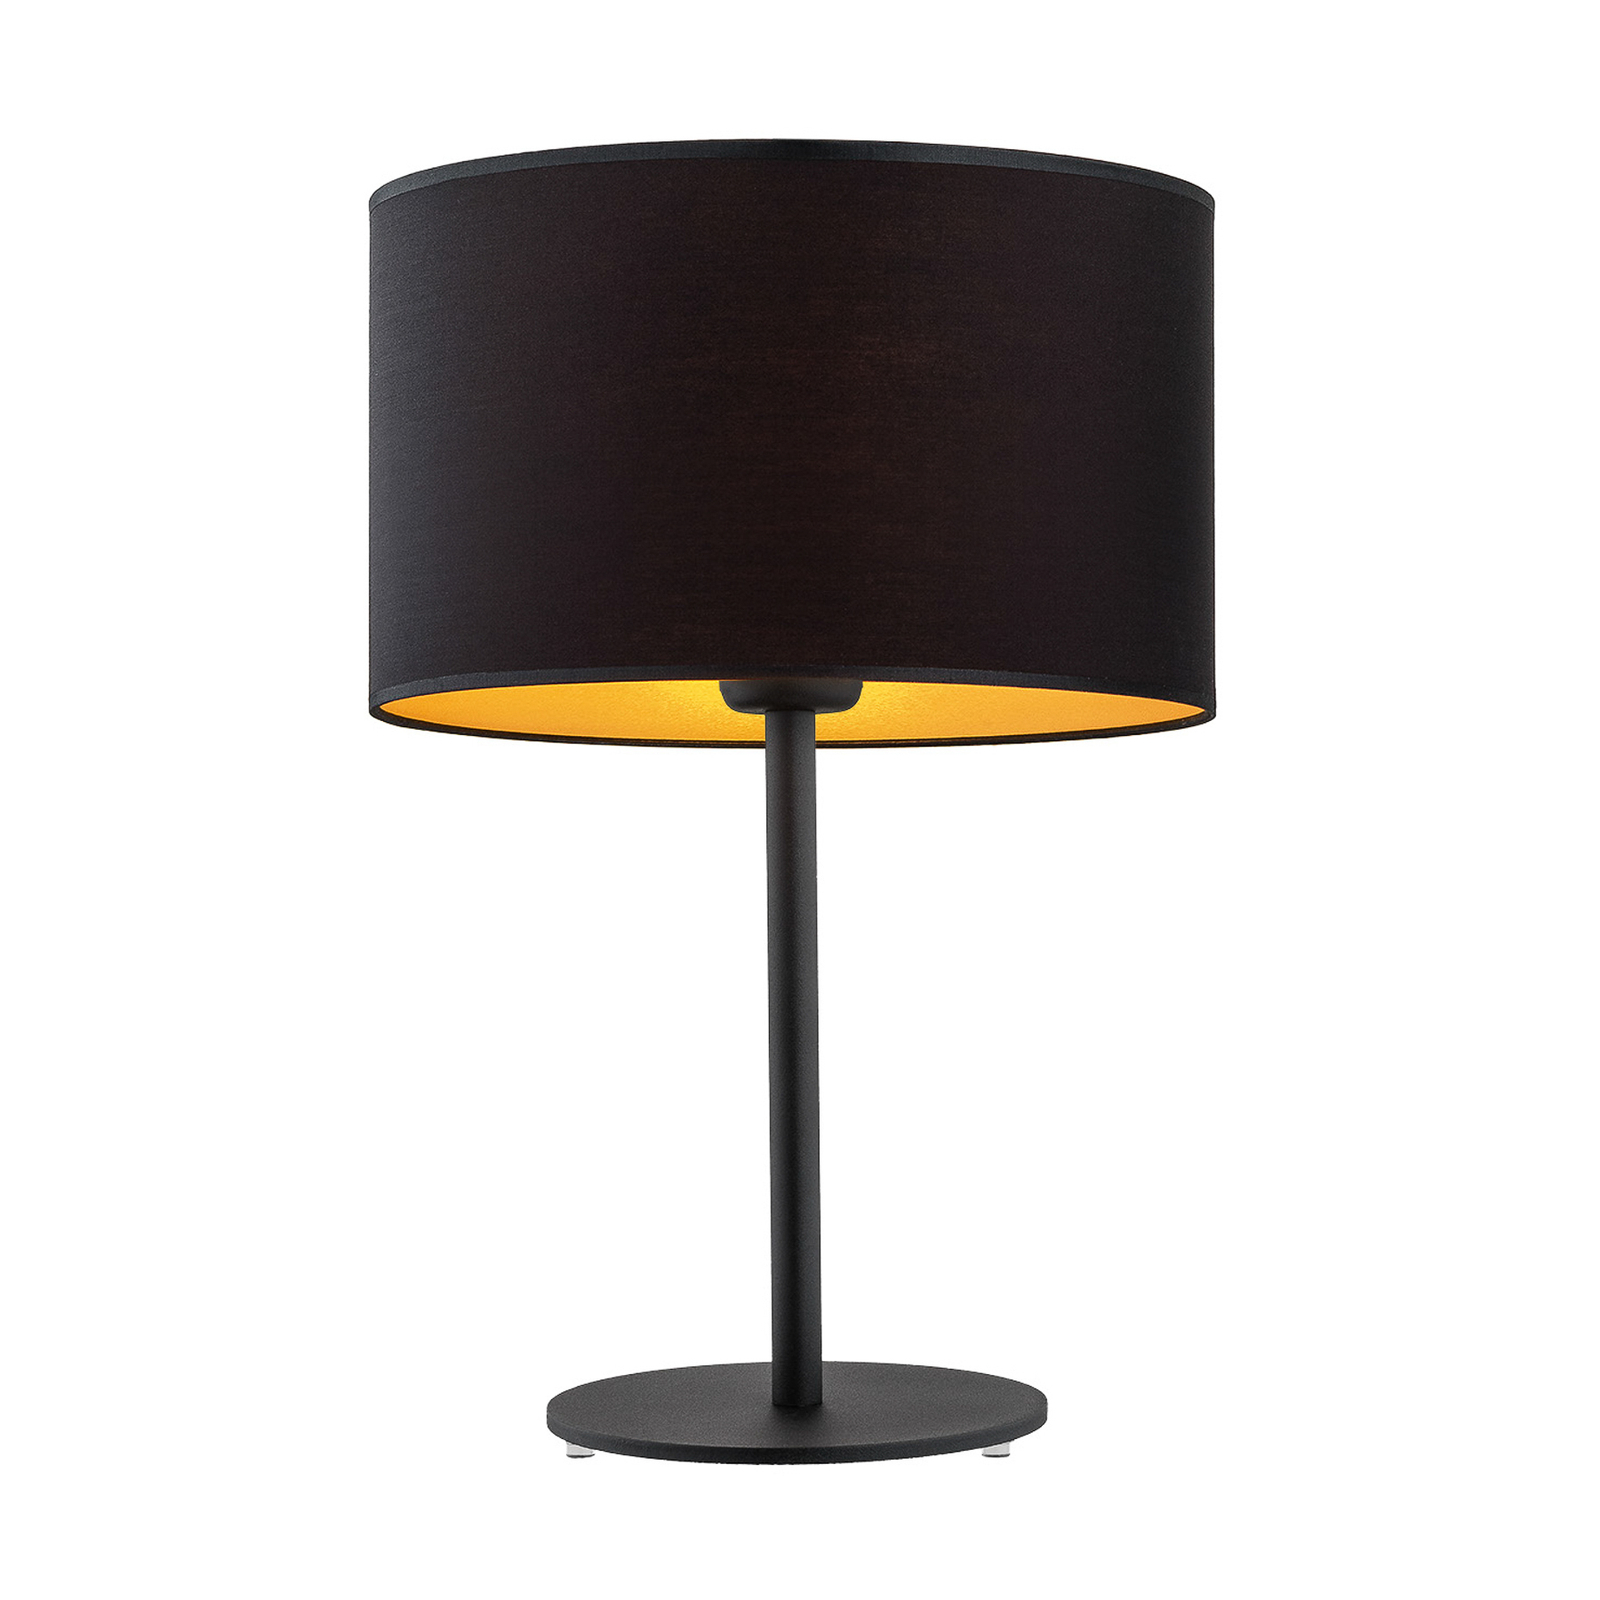 Lobera table lamp, all in black